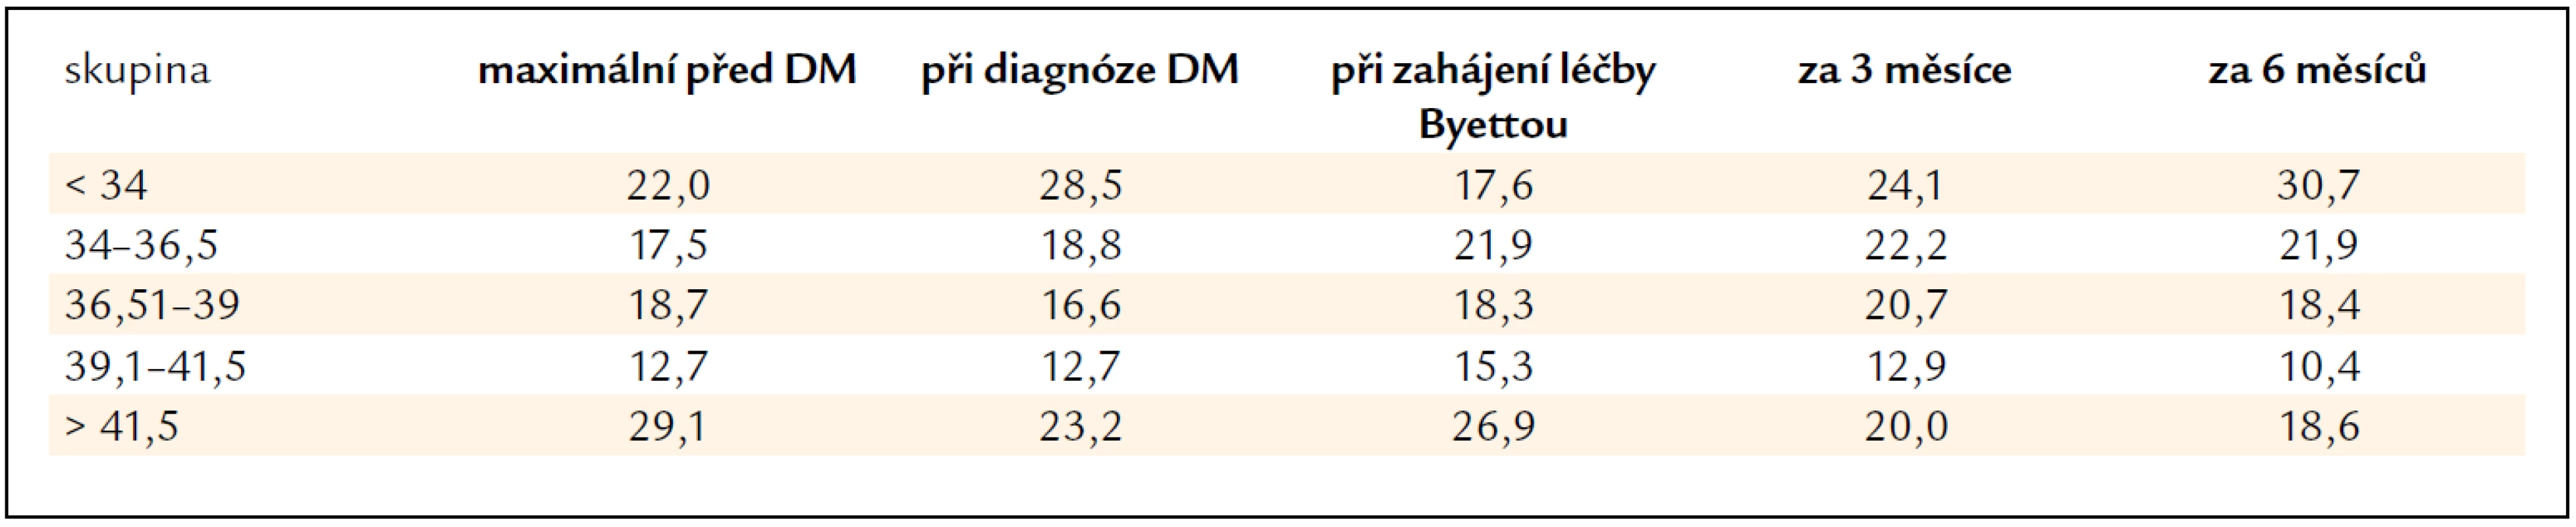 Procenta nemocných v odhadem určených skupinách podle BMI.